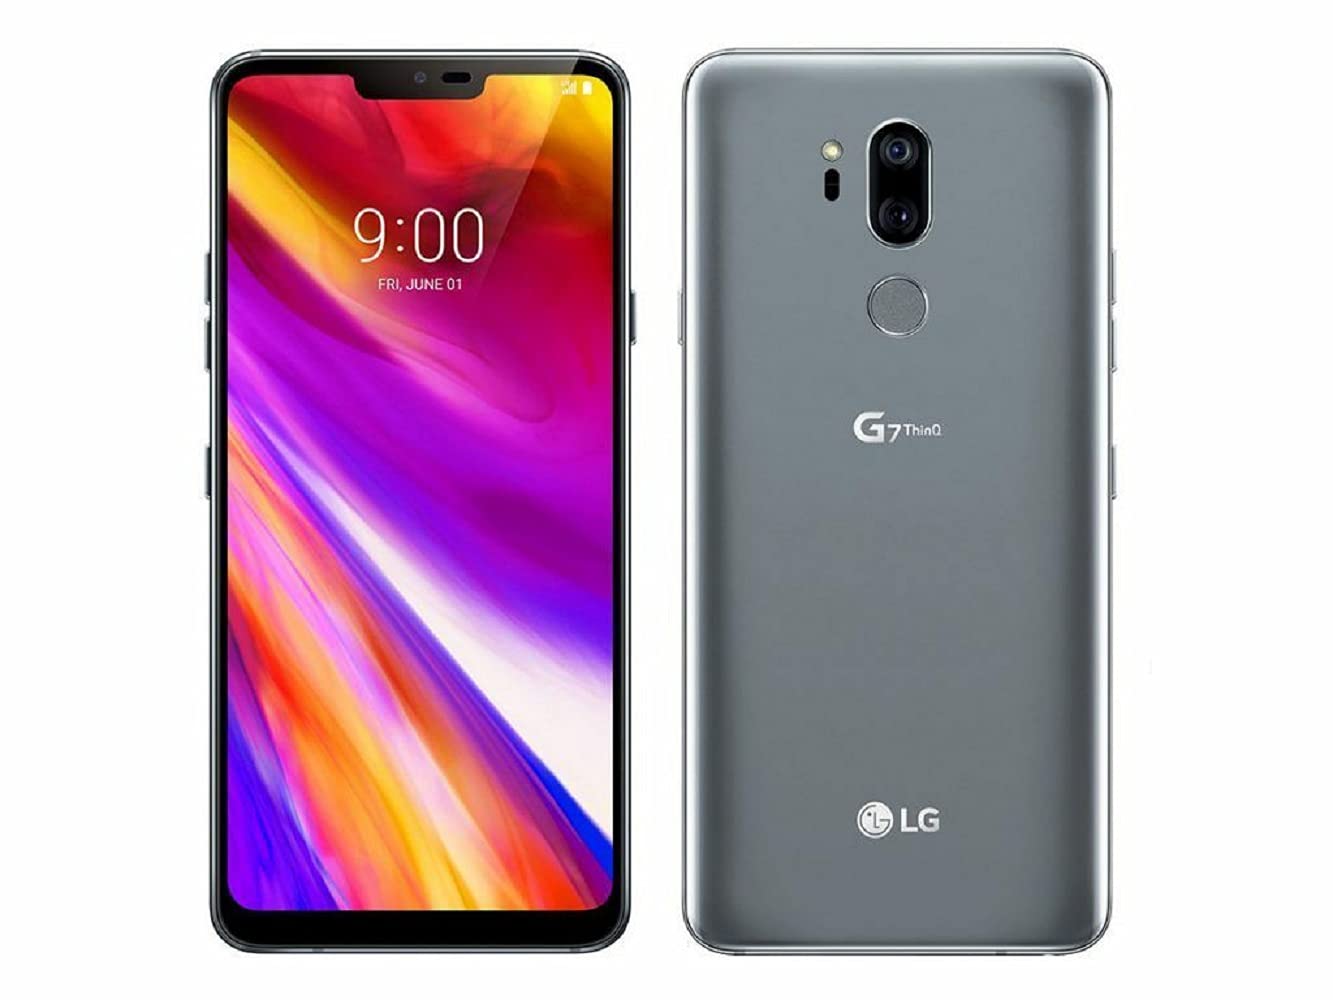 LG G7 ThinQ 64gb Unlocked Smartphone- Silver